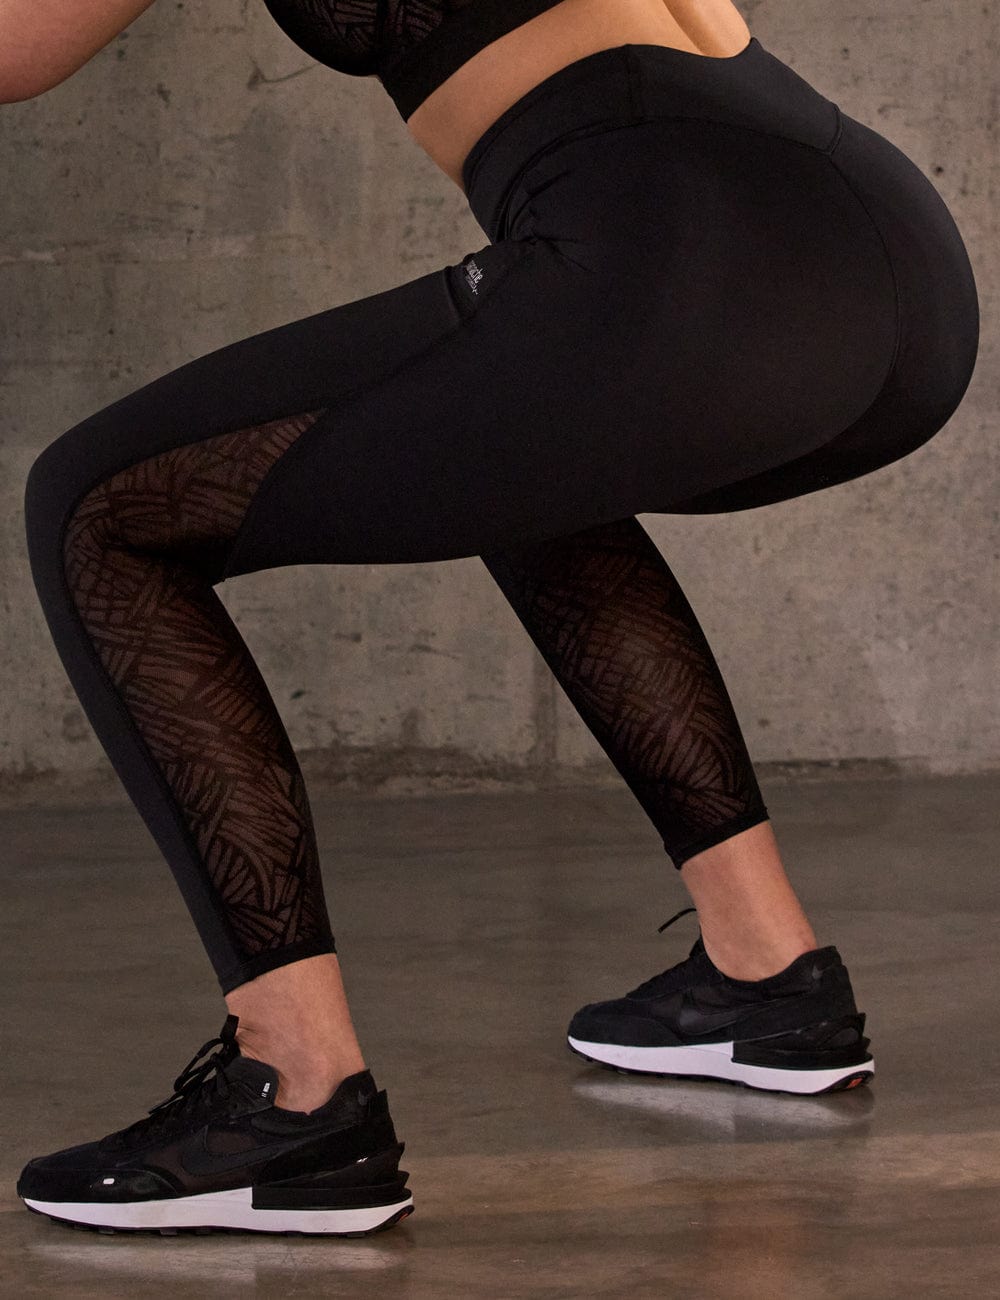 Victoria Secret Sport Capri Leggings size S/P – My Fashion Stash